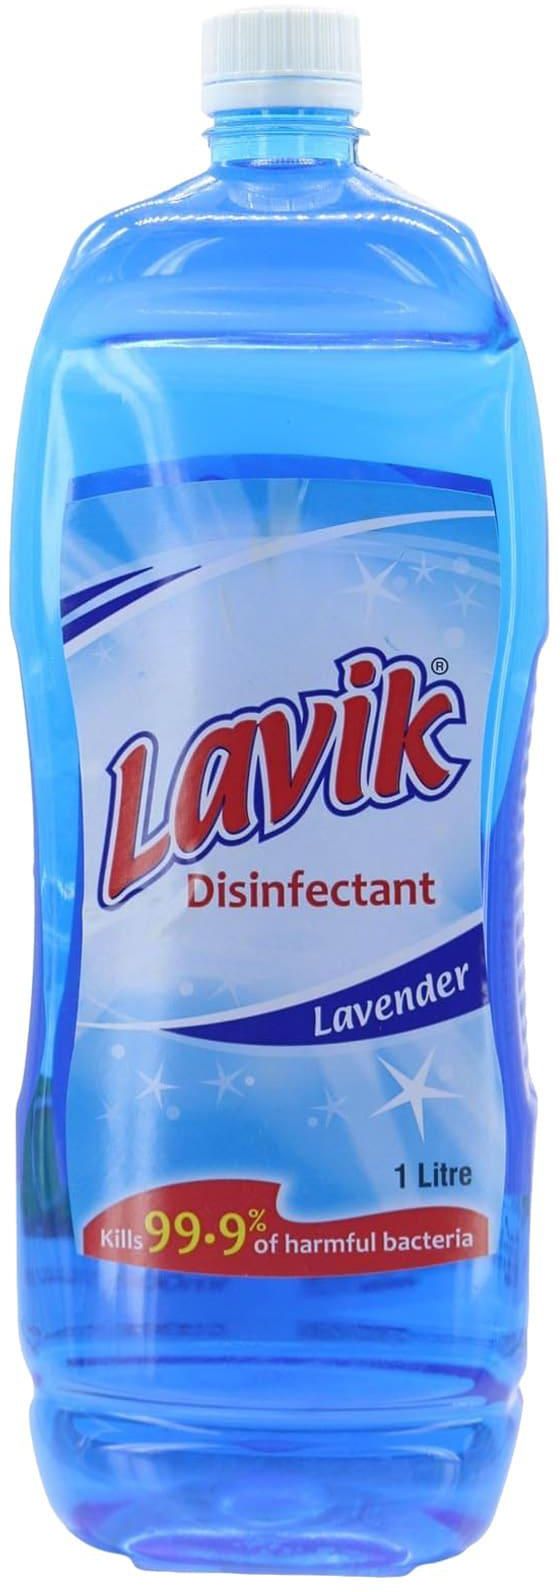 Lavik Disinfectant Lavender 1L